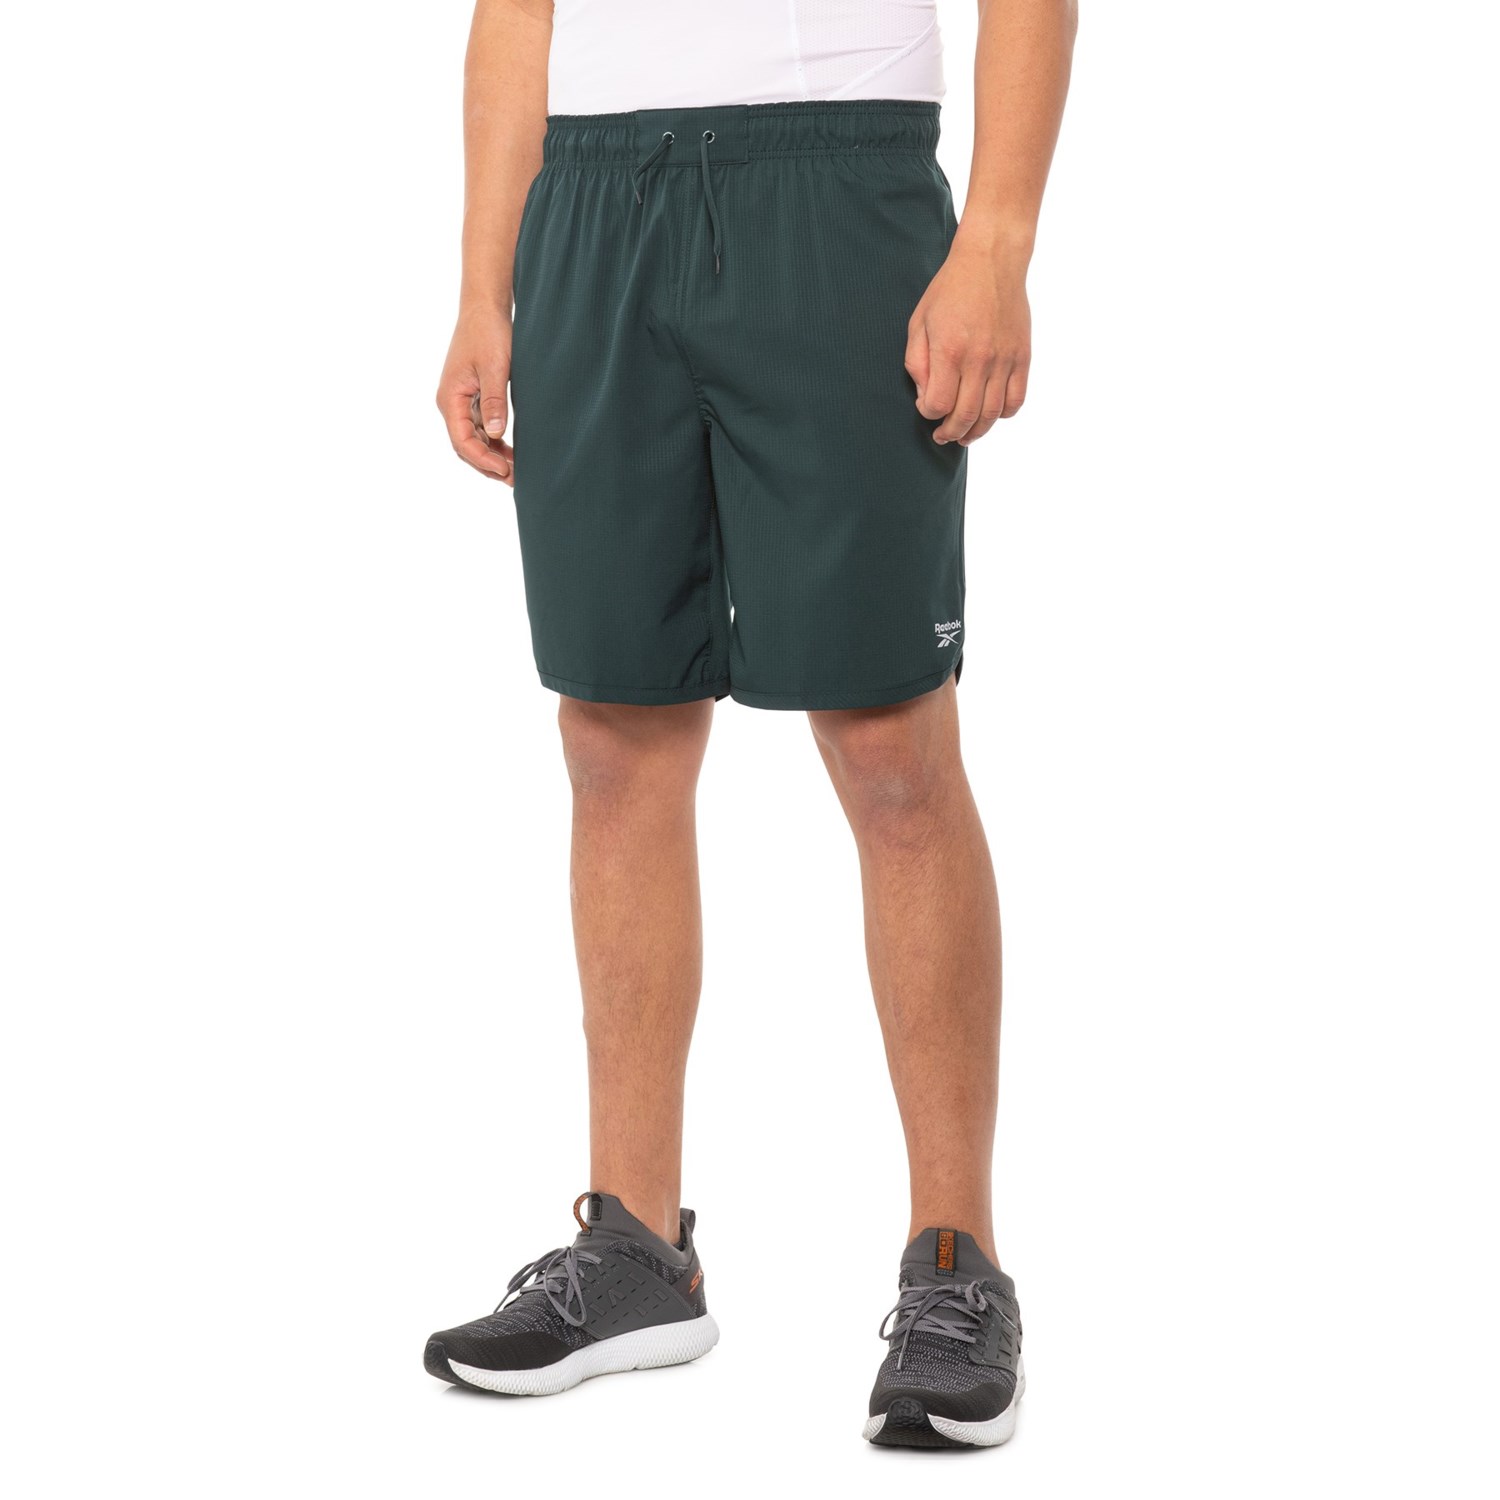 Reebok Paceline Woven Shorts (For Men) - Save 70%